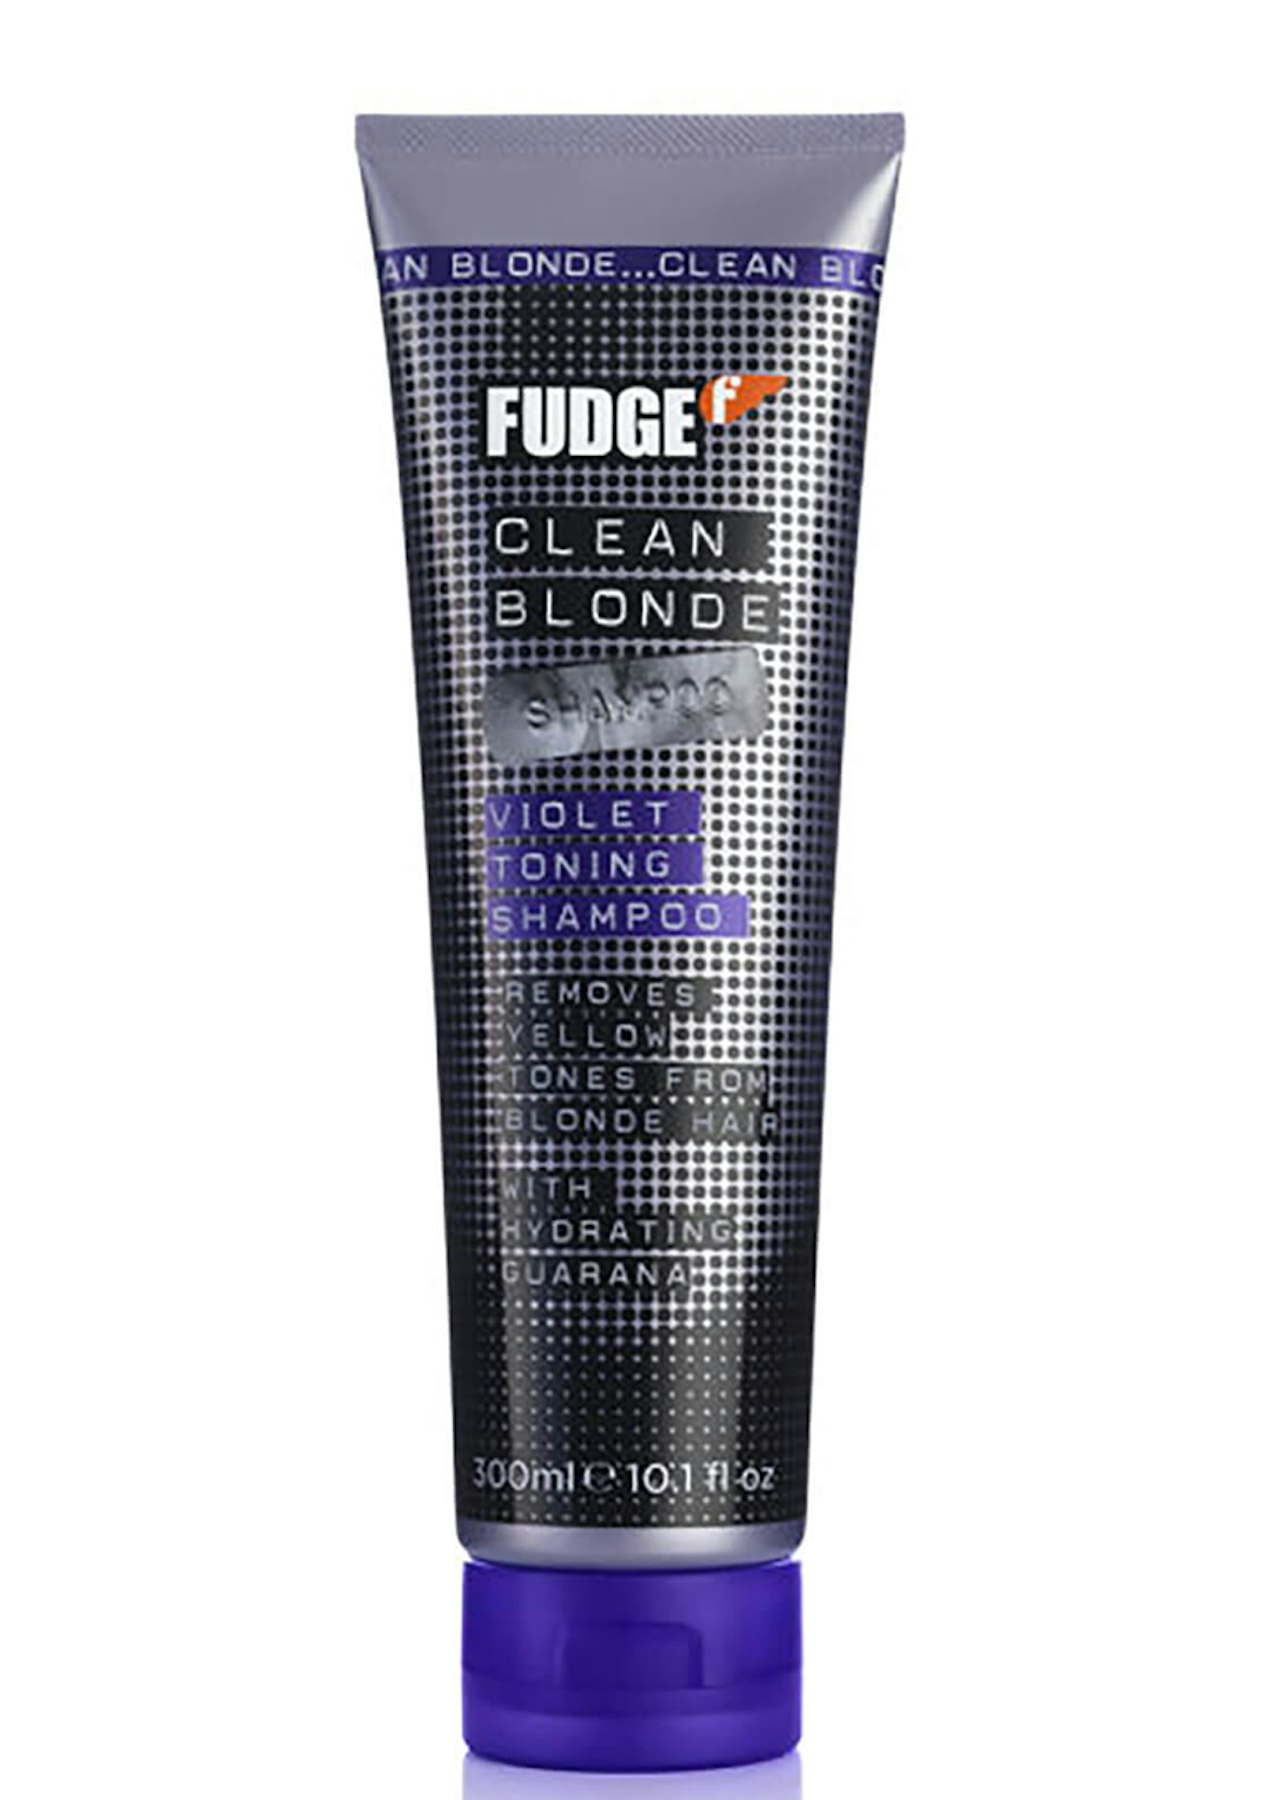 Fudge Blonde Violet Shampoo 300ml Big Brand Haircare Price